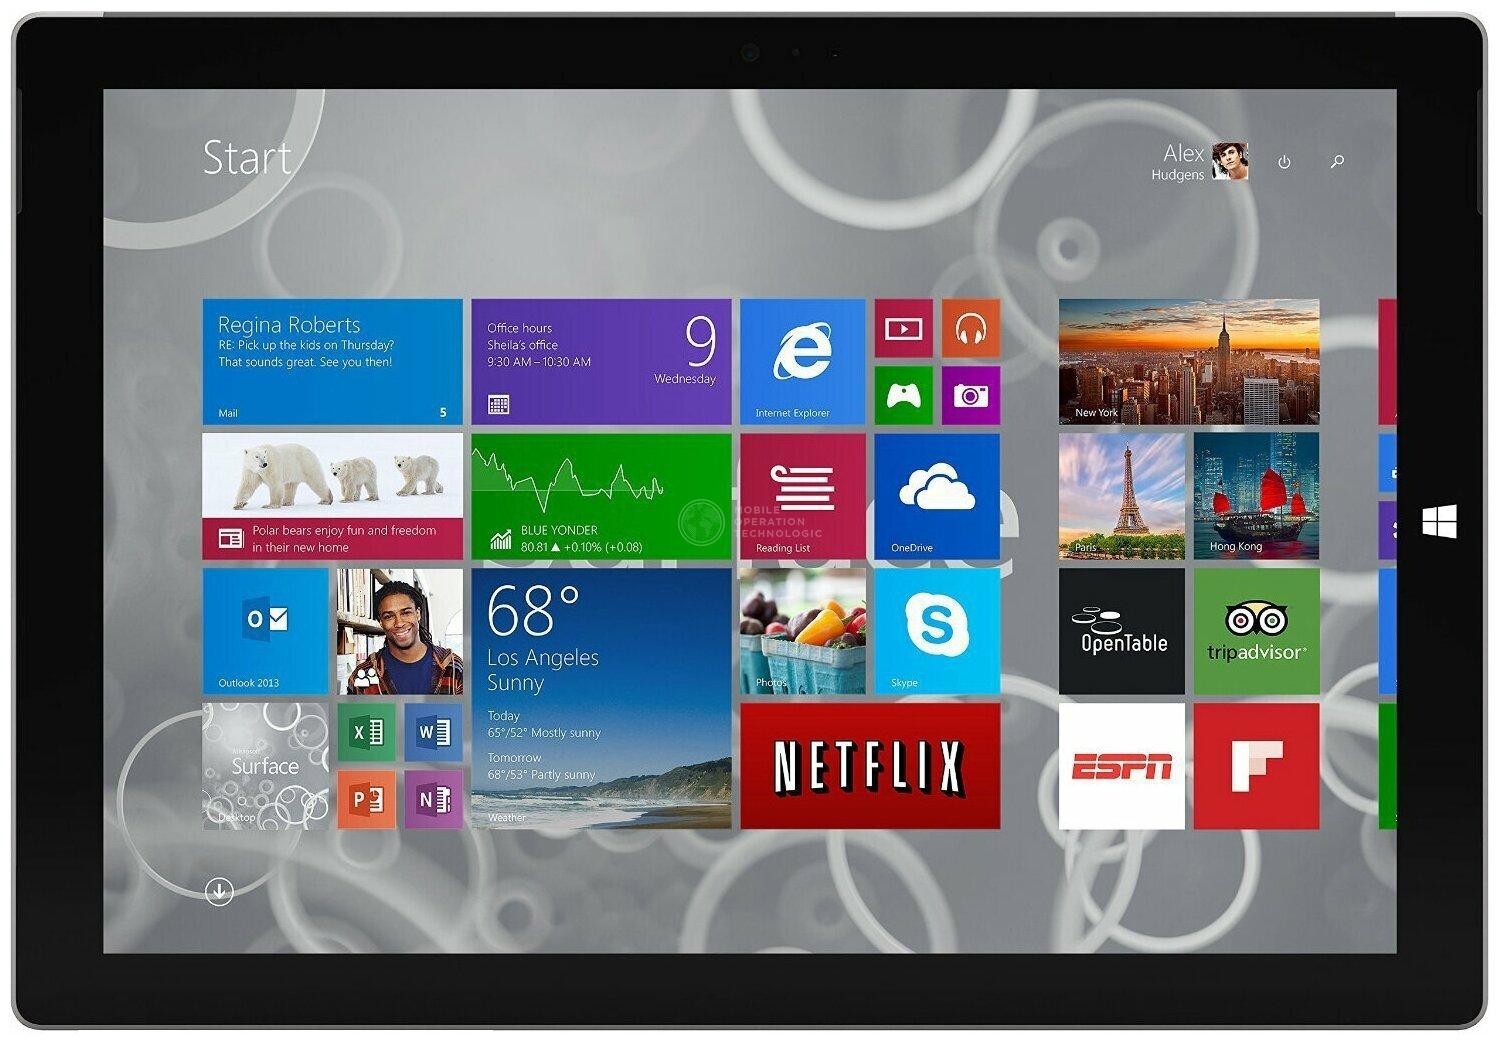 Microsoft Surface Pro 3 i7